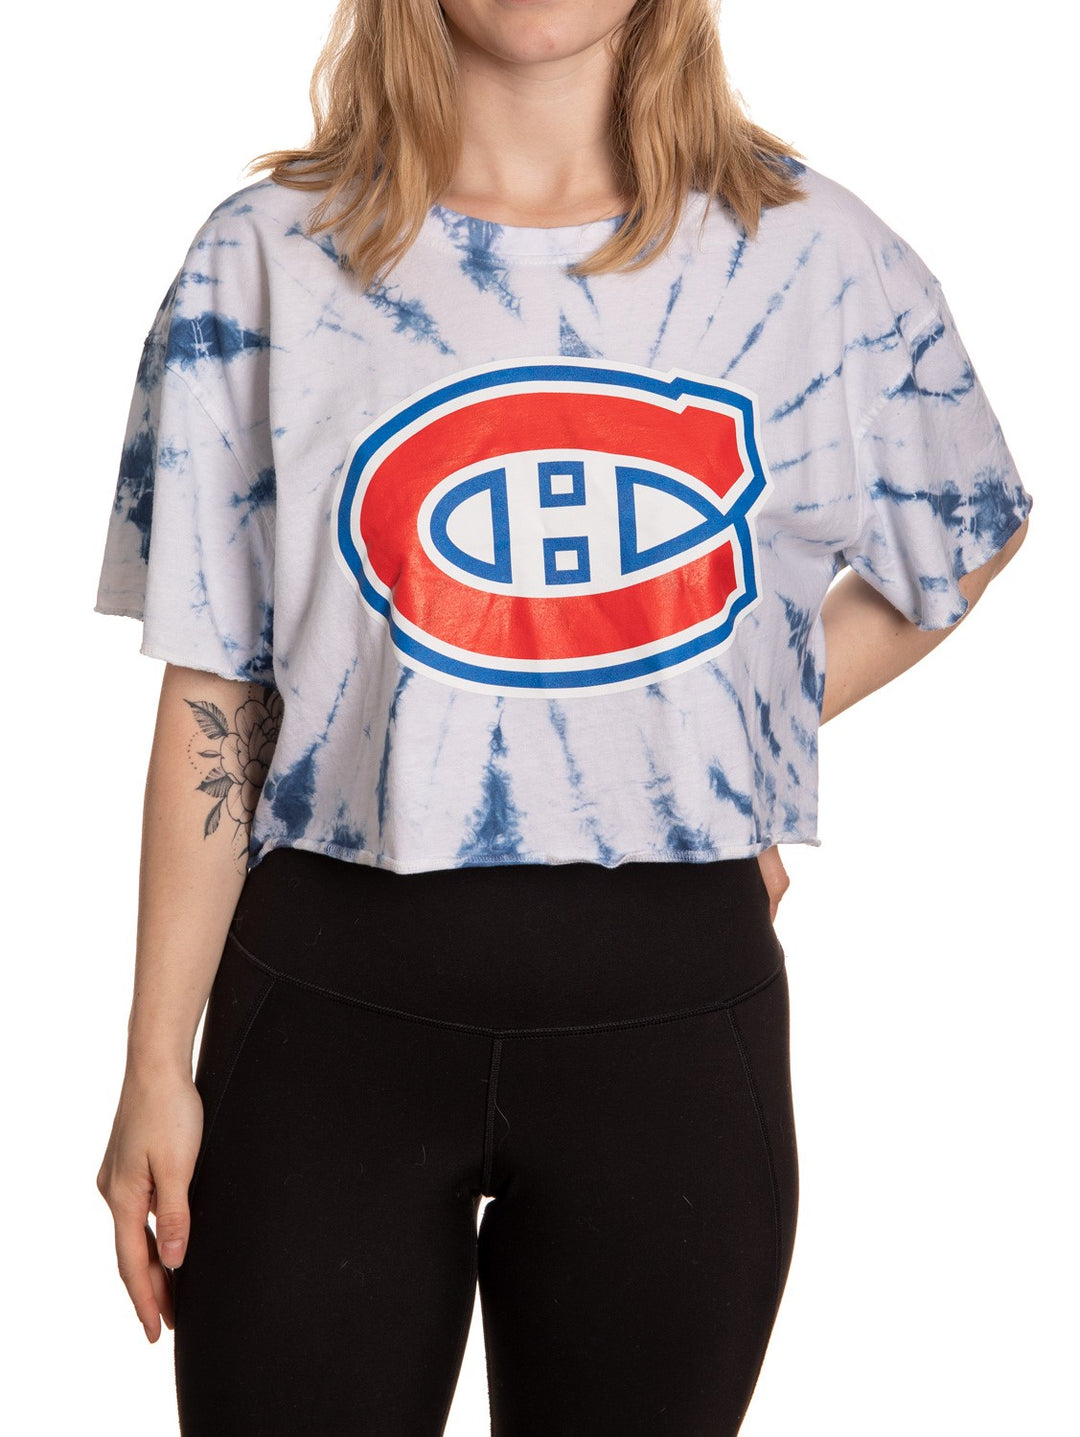 Montreal Canadiens Tie Dye Crop Top for Women Front View